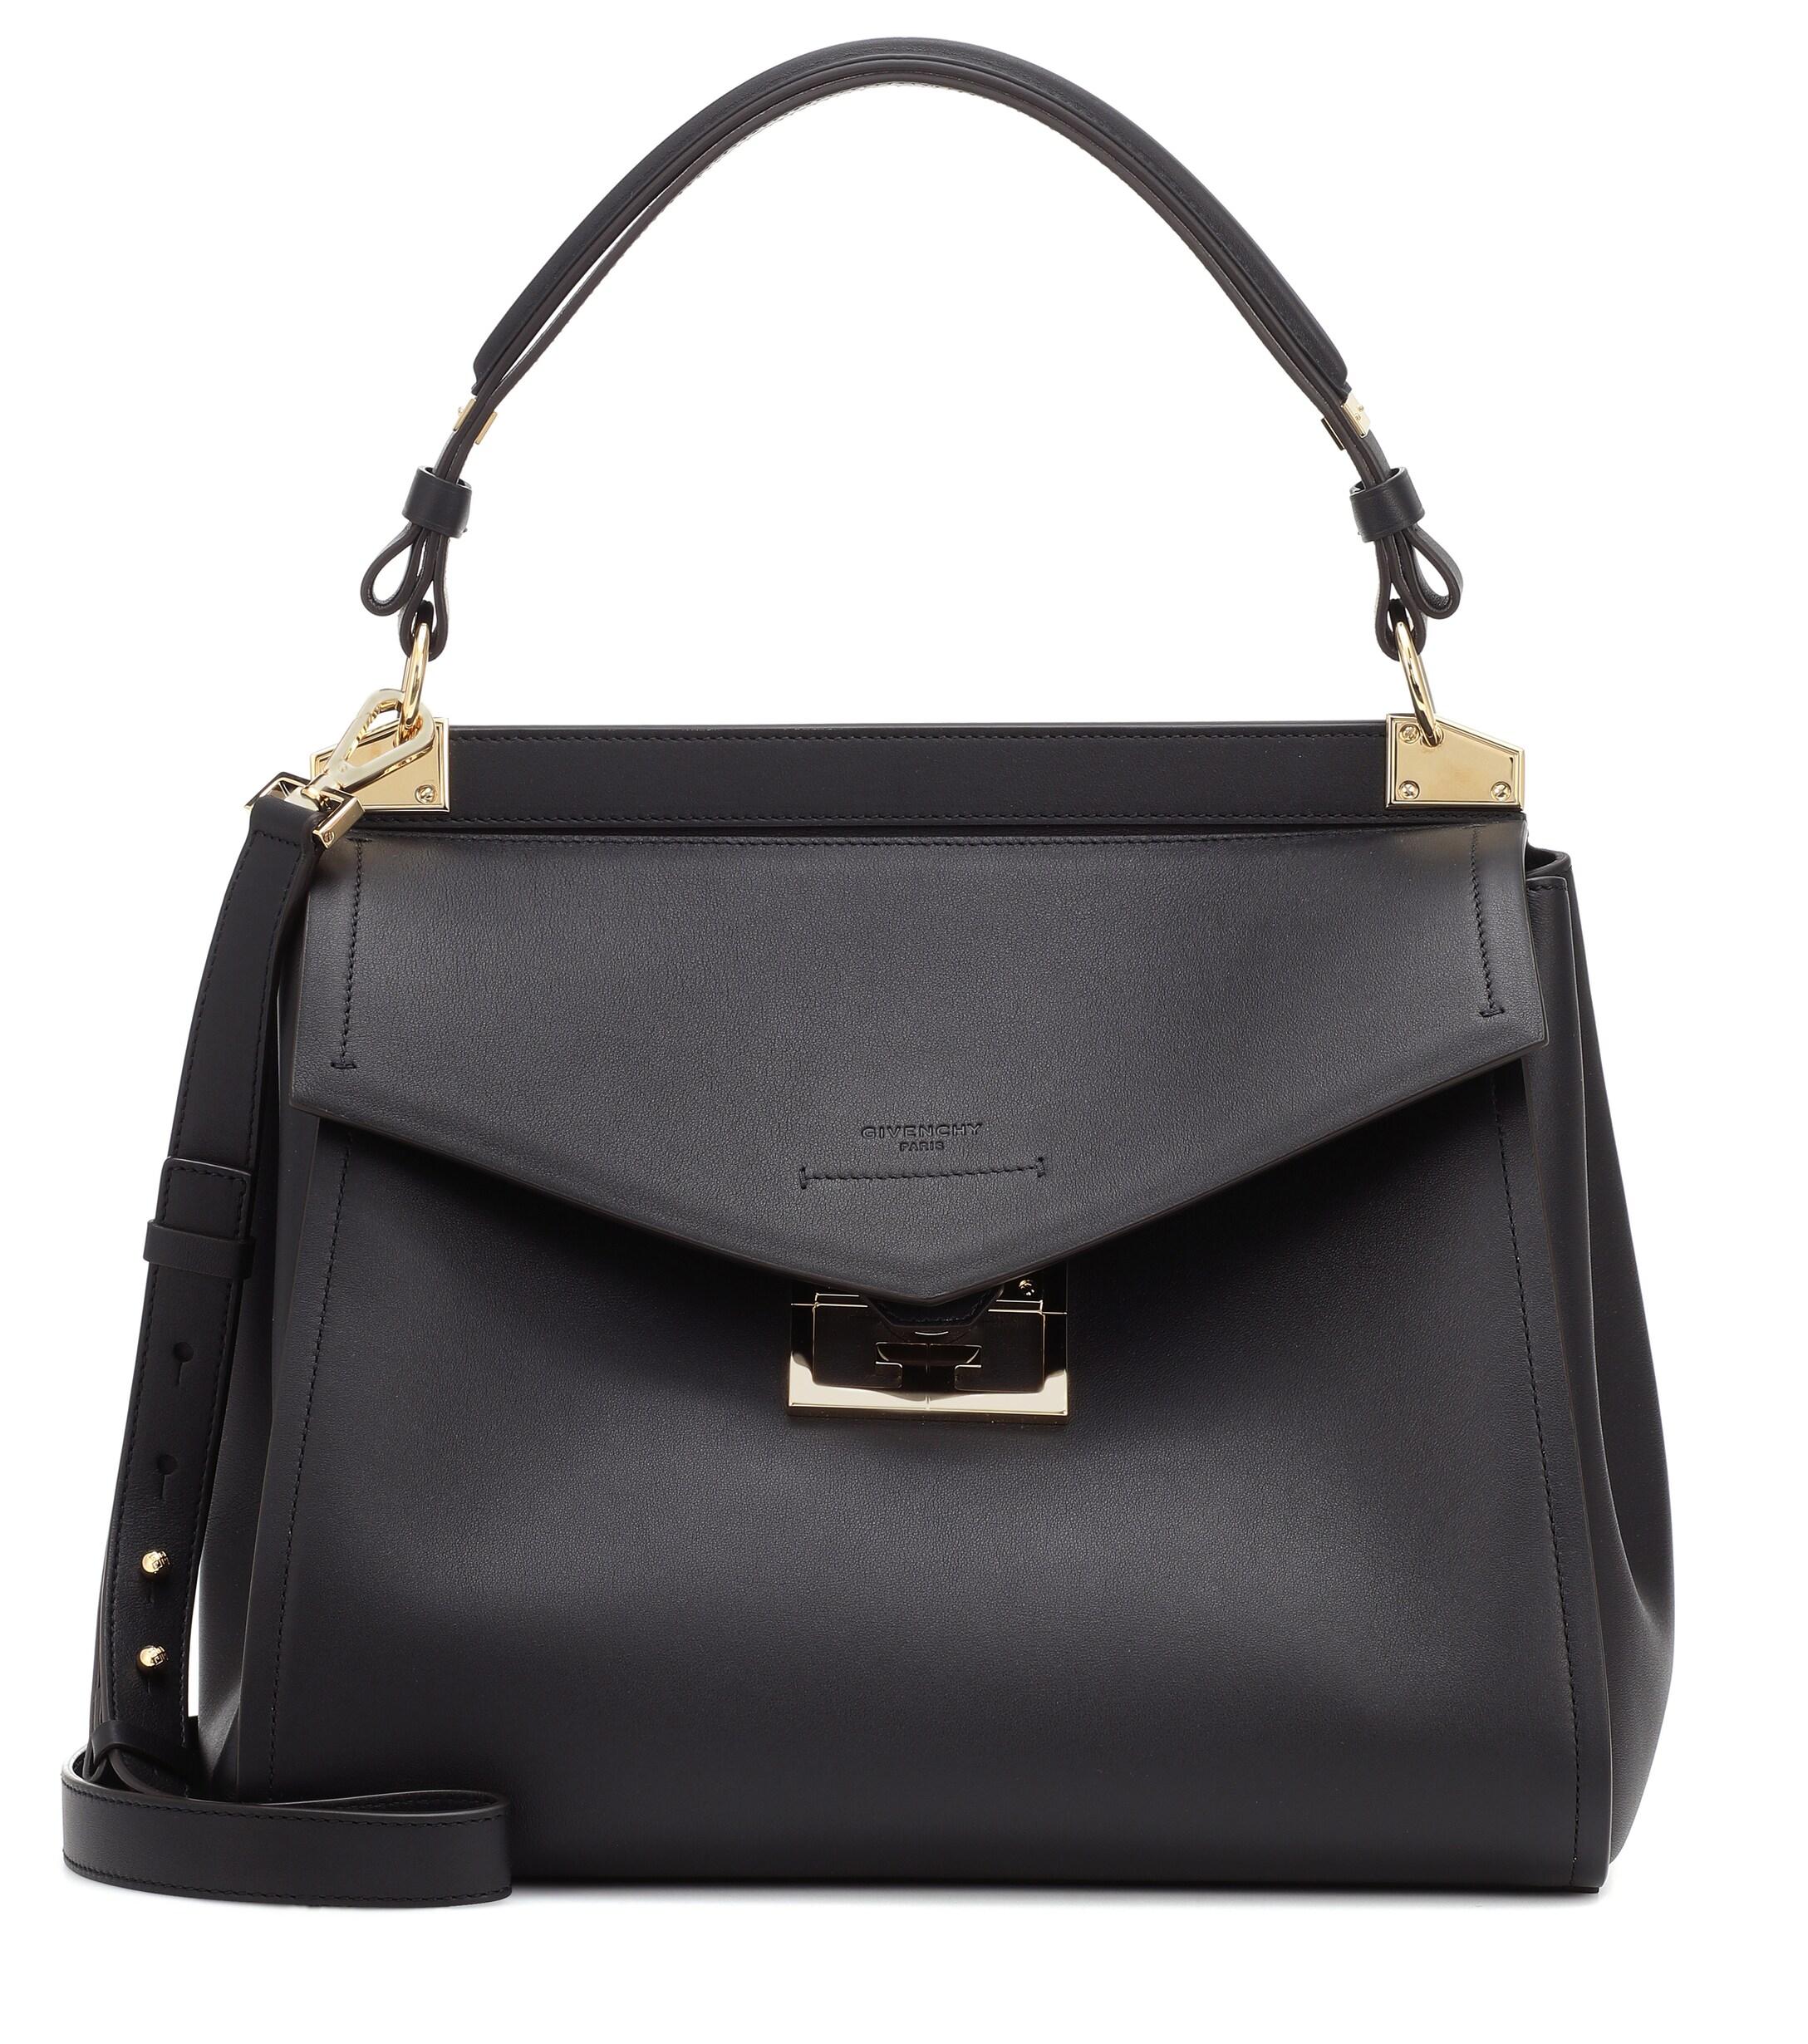 Givenchy Mystic Medium Leather Shoulder Bag in Black - Lyst